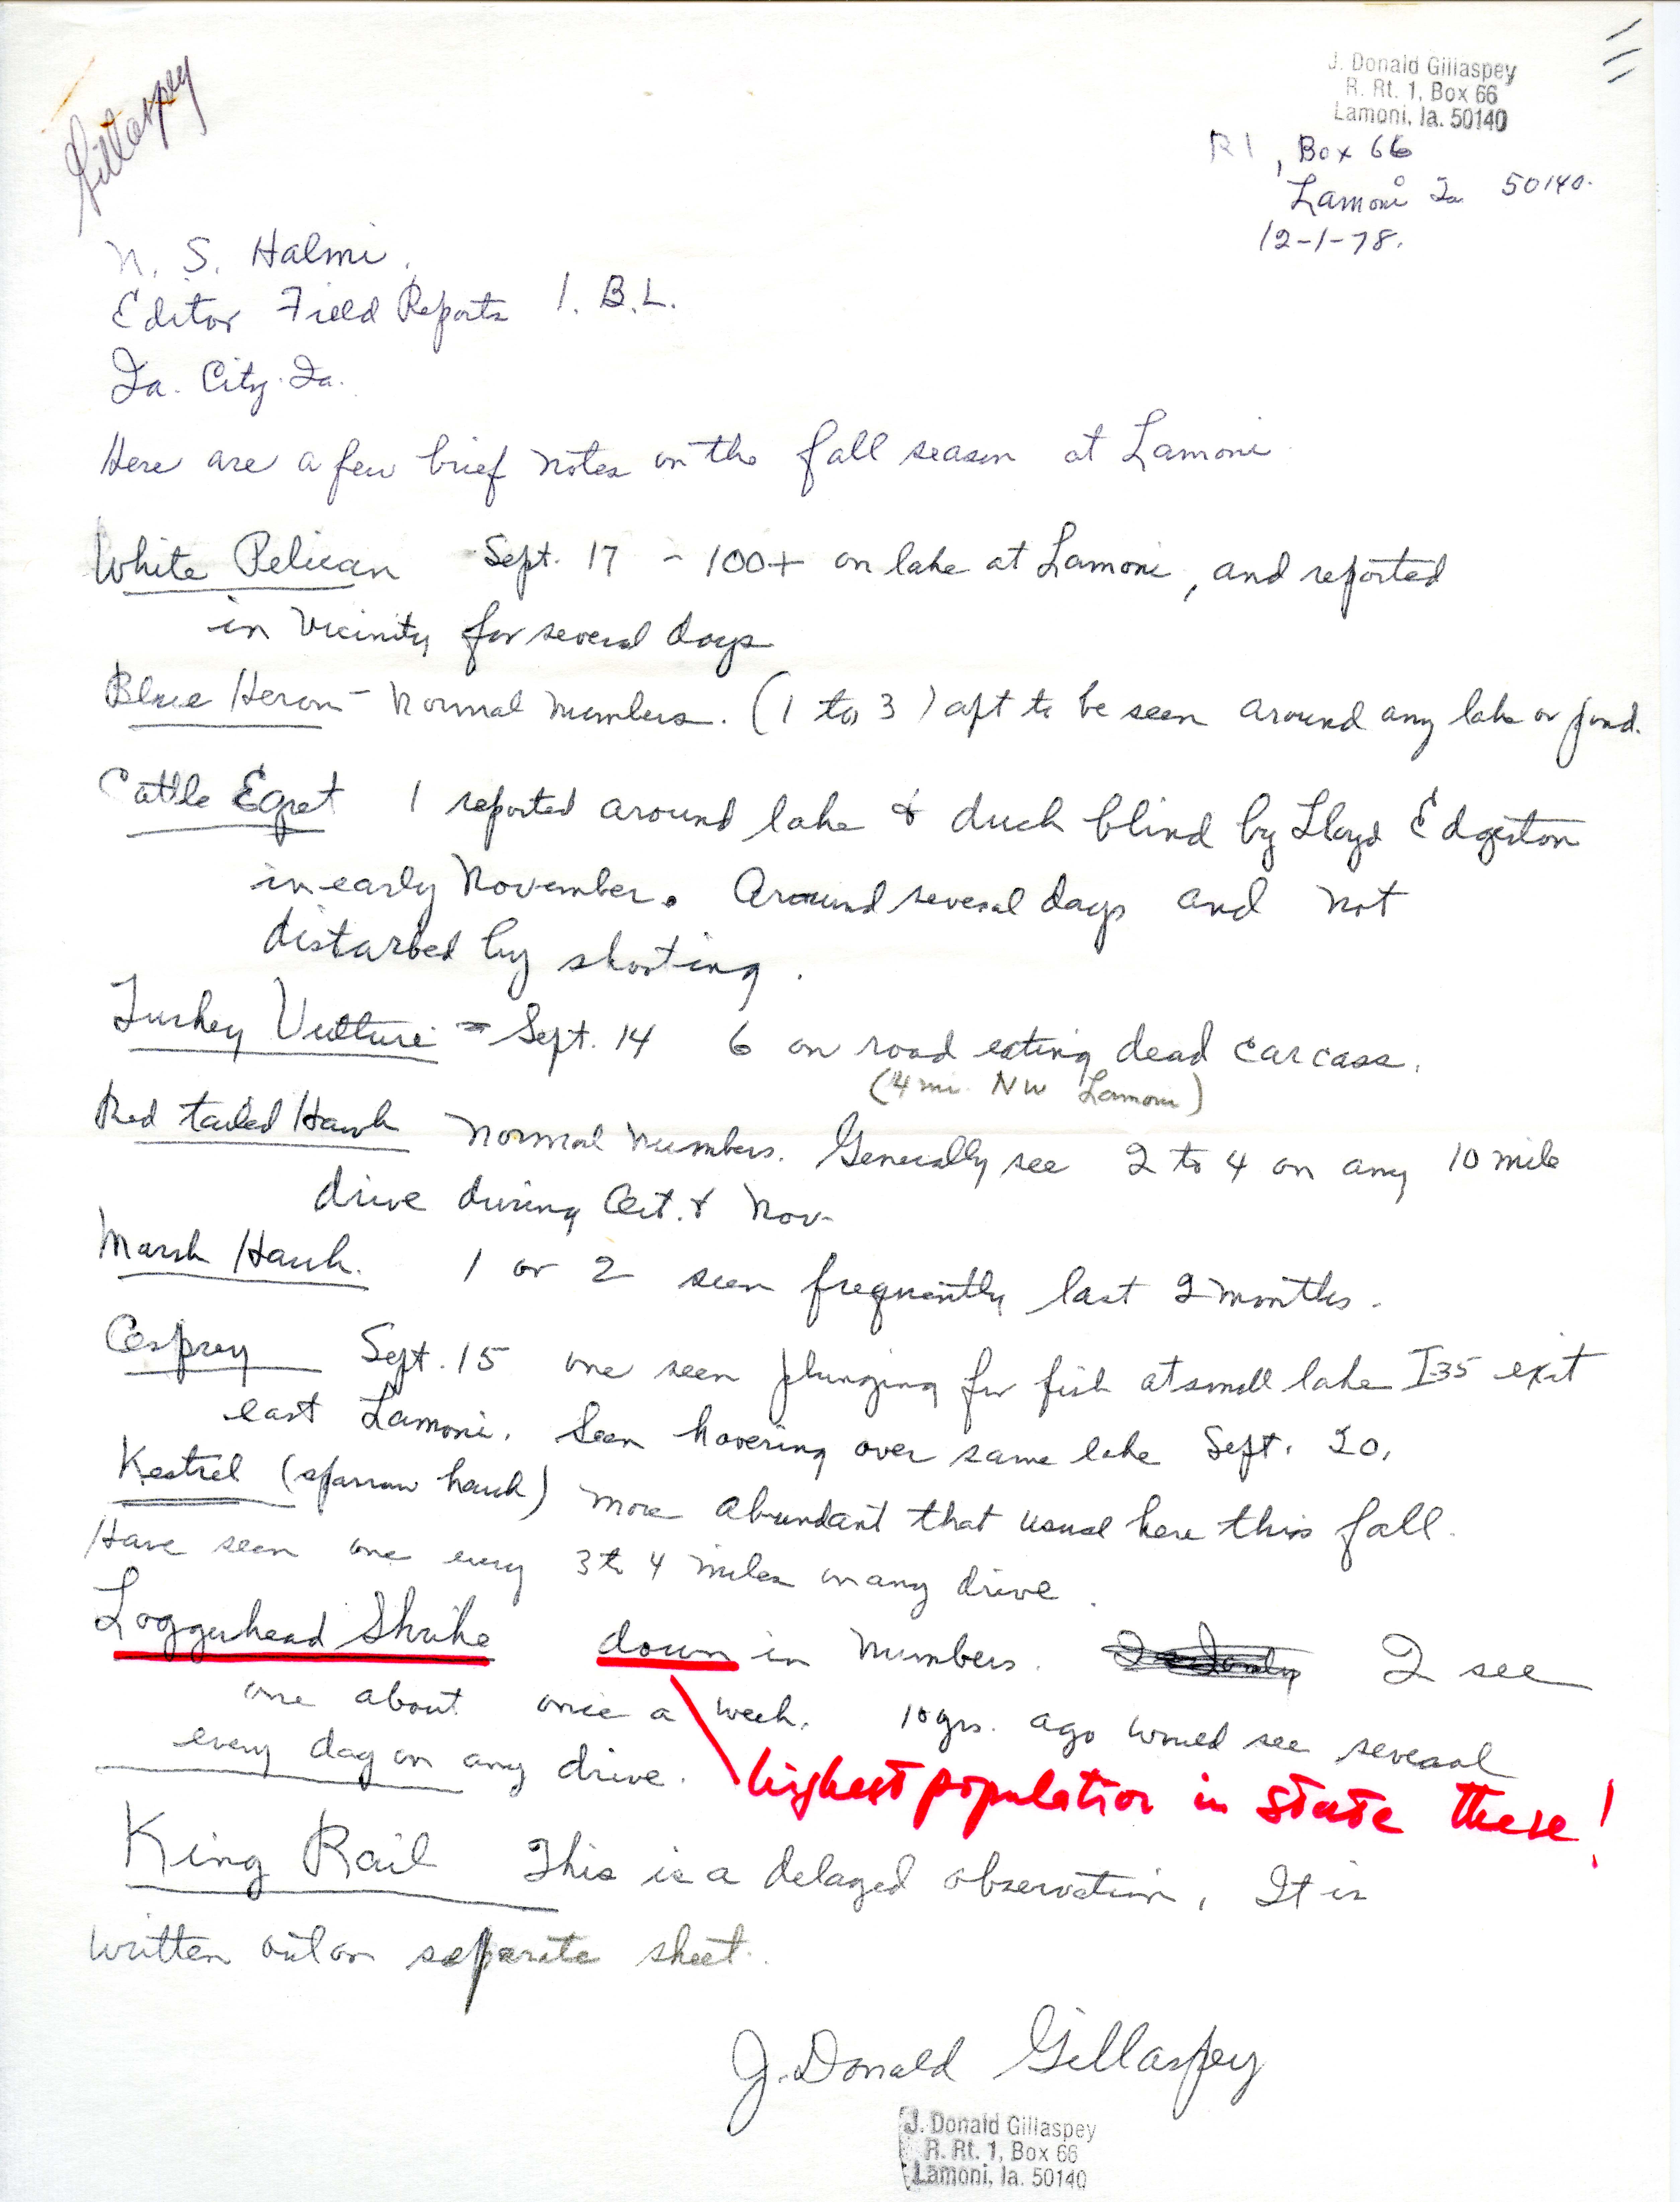 Donald J. Gillaspey letter to Nicholas S. Halmi regarding bird sightings, December 1, 1978 